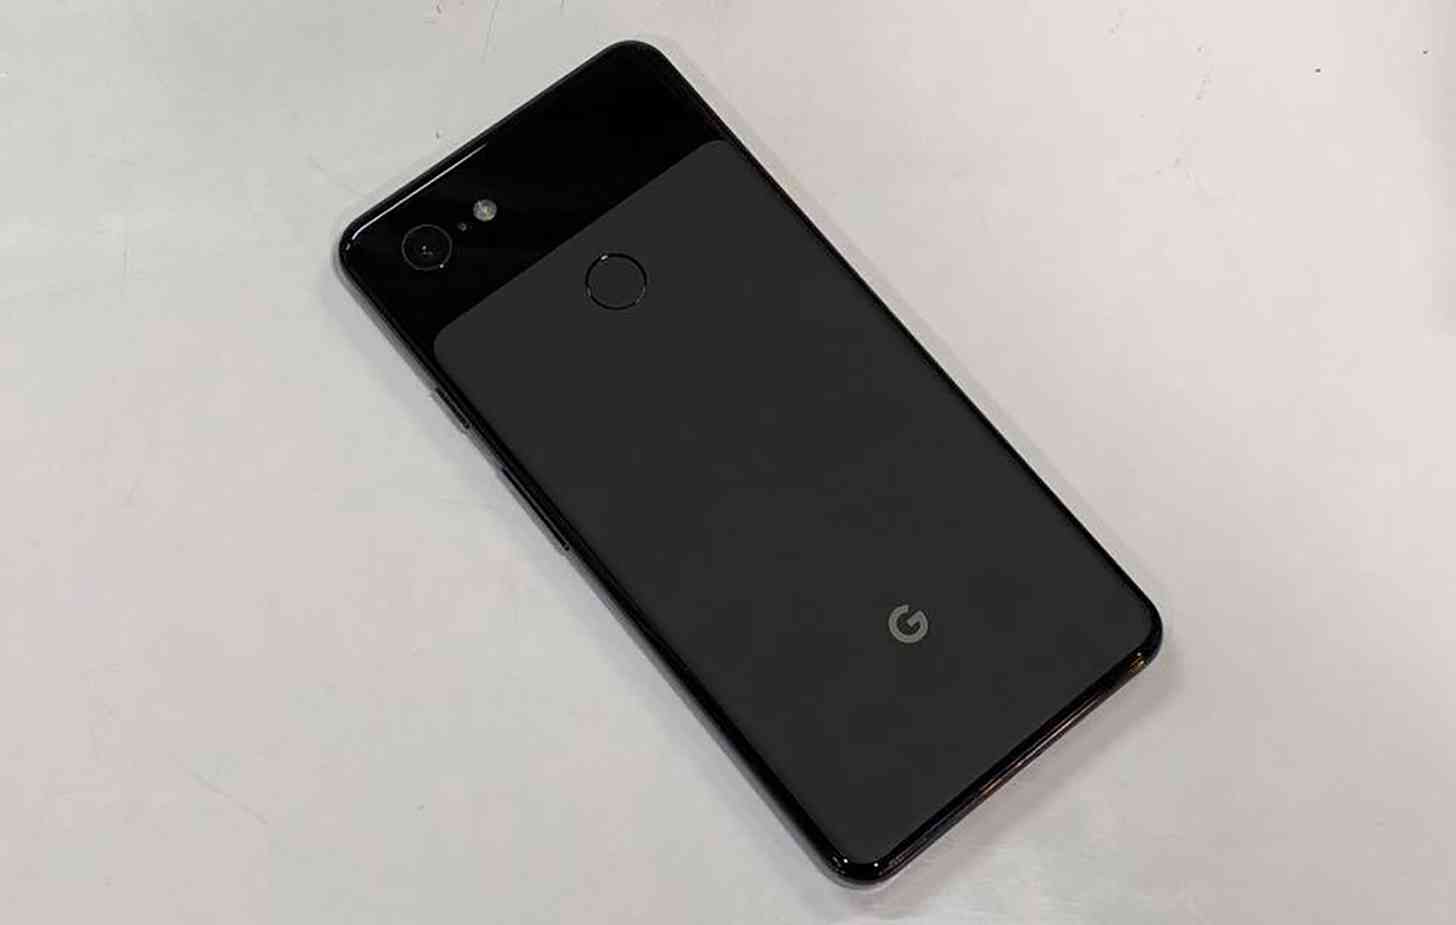 Google Pixel 3 XL rear hands-on